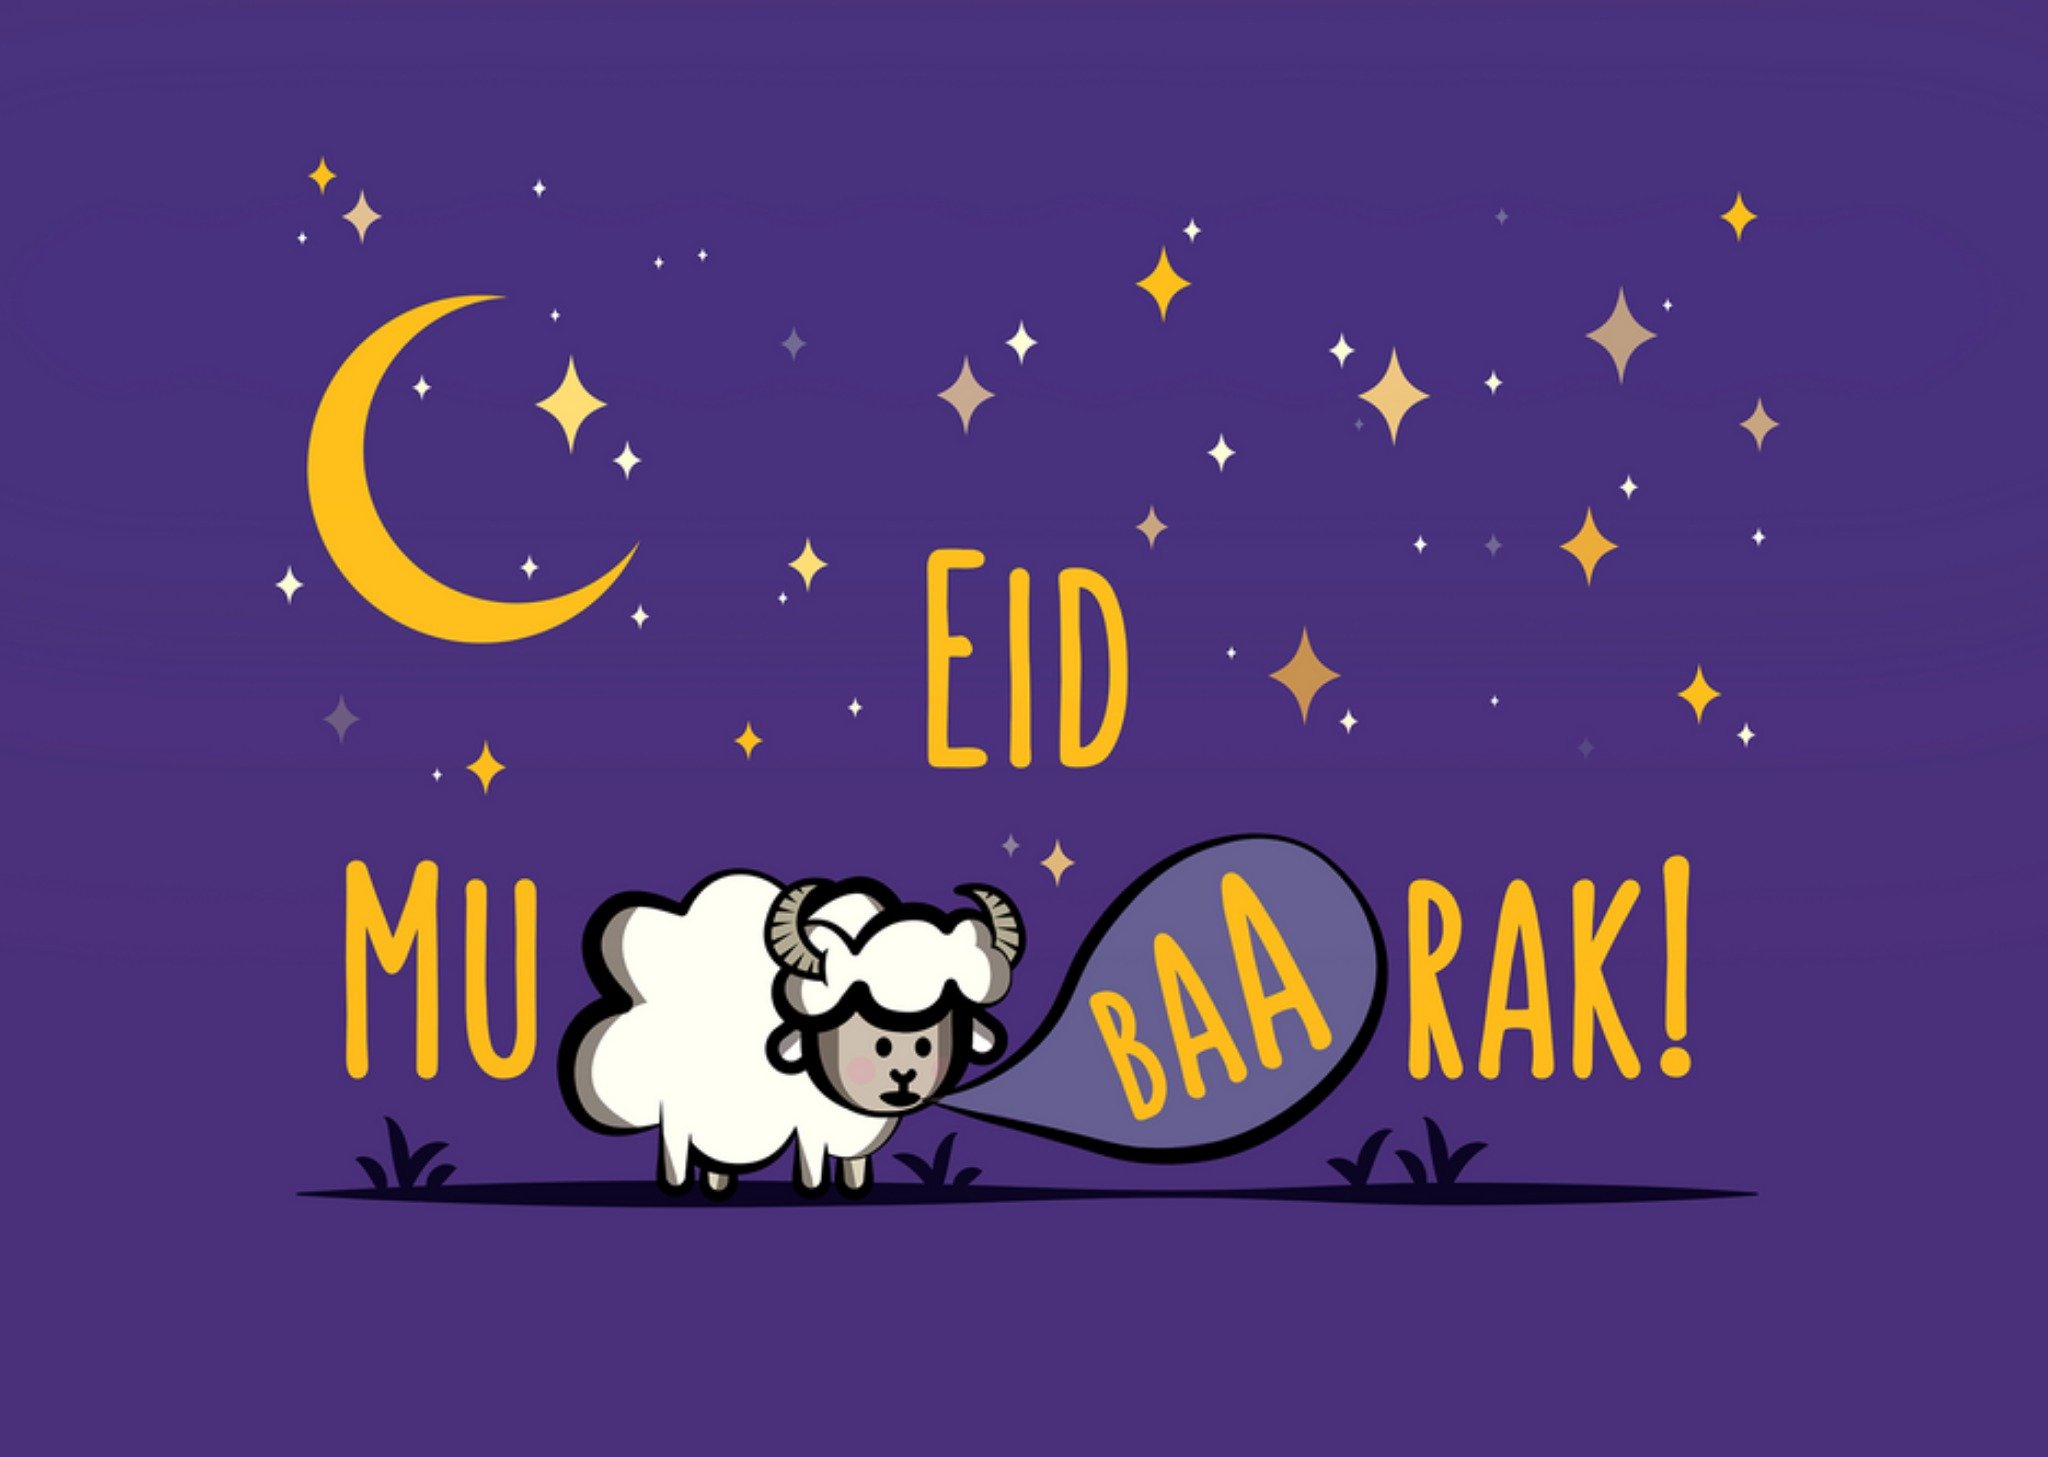 Moonpig The Cute Pista Eid Mu Baa Rak Cartoon Sheep Eid Mubarak Card, Large